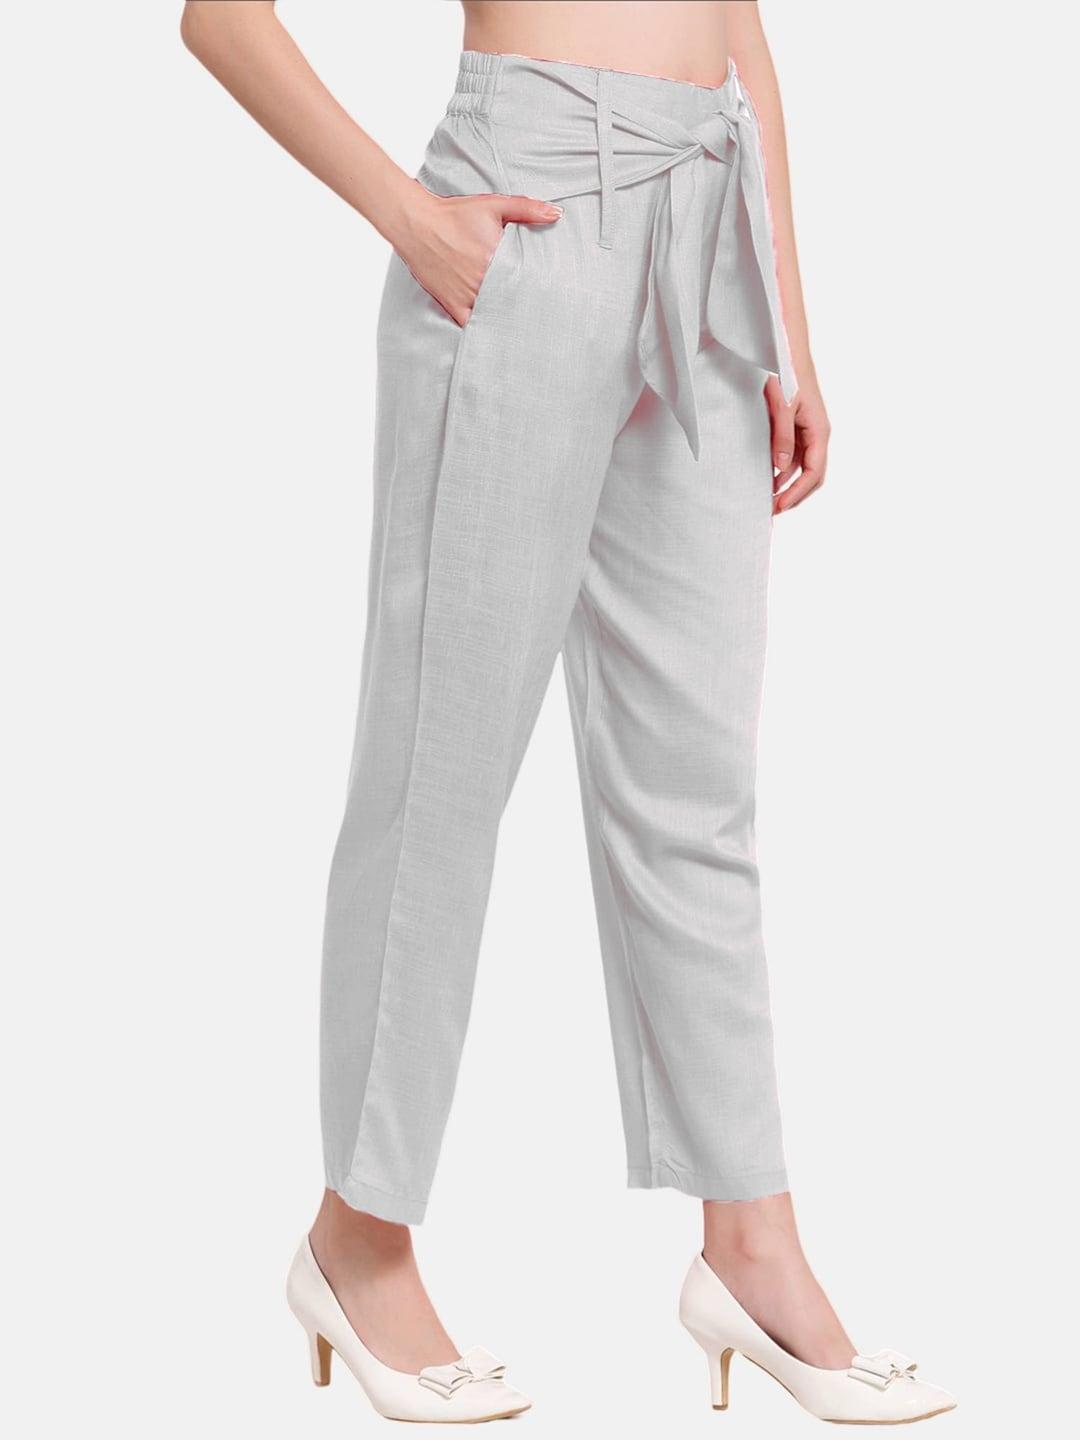 patrorna-women-smart-fit-peg-trousers